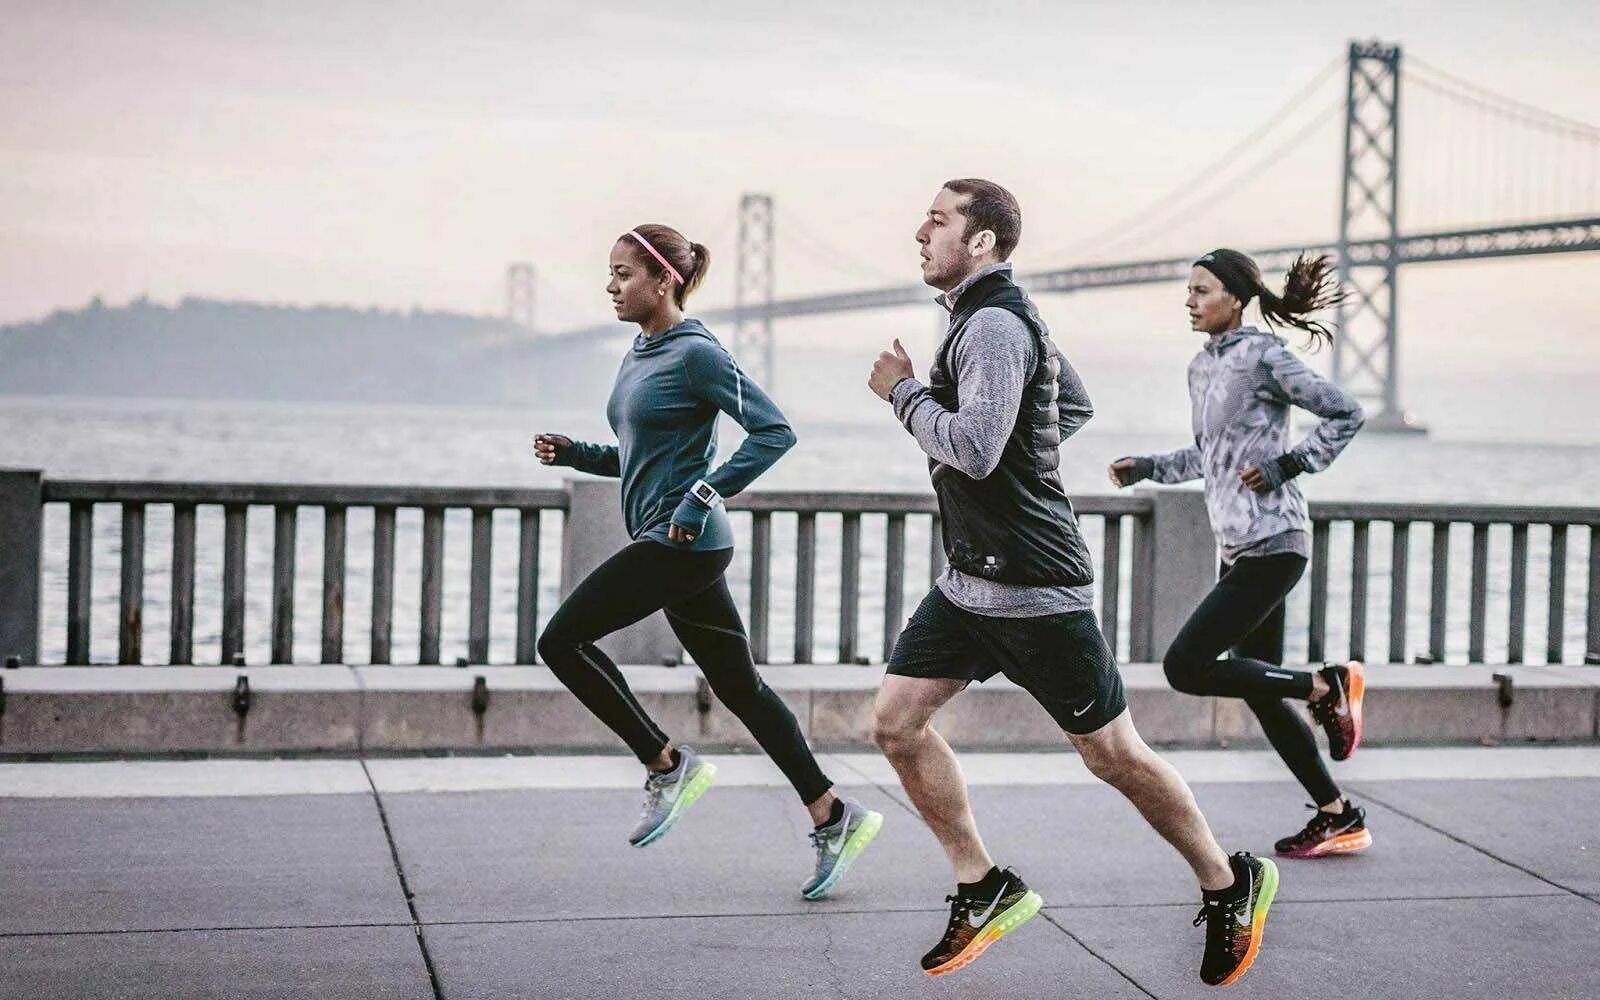 Nike Running. Nike Running бег. Занятие спортом. Фотосессия в спортивном стиле.